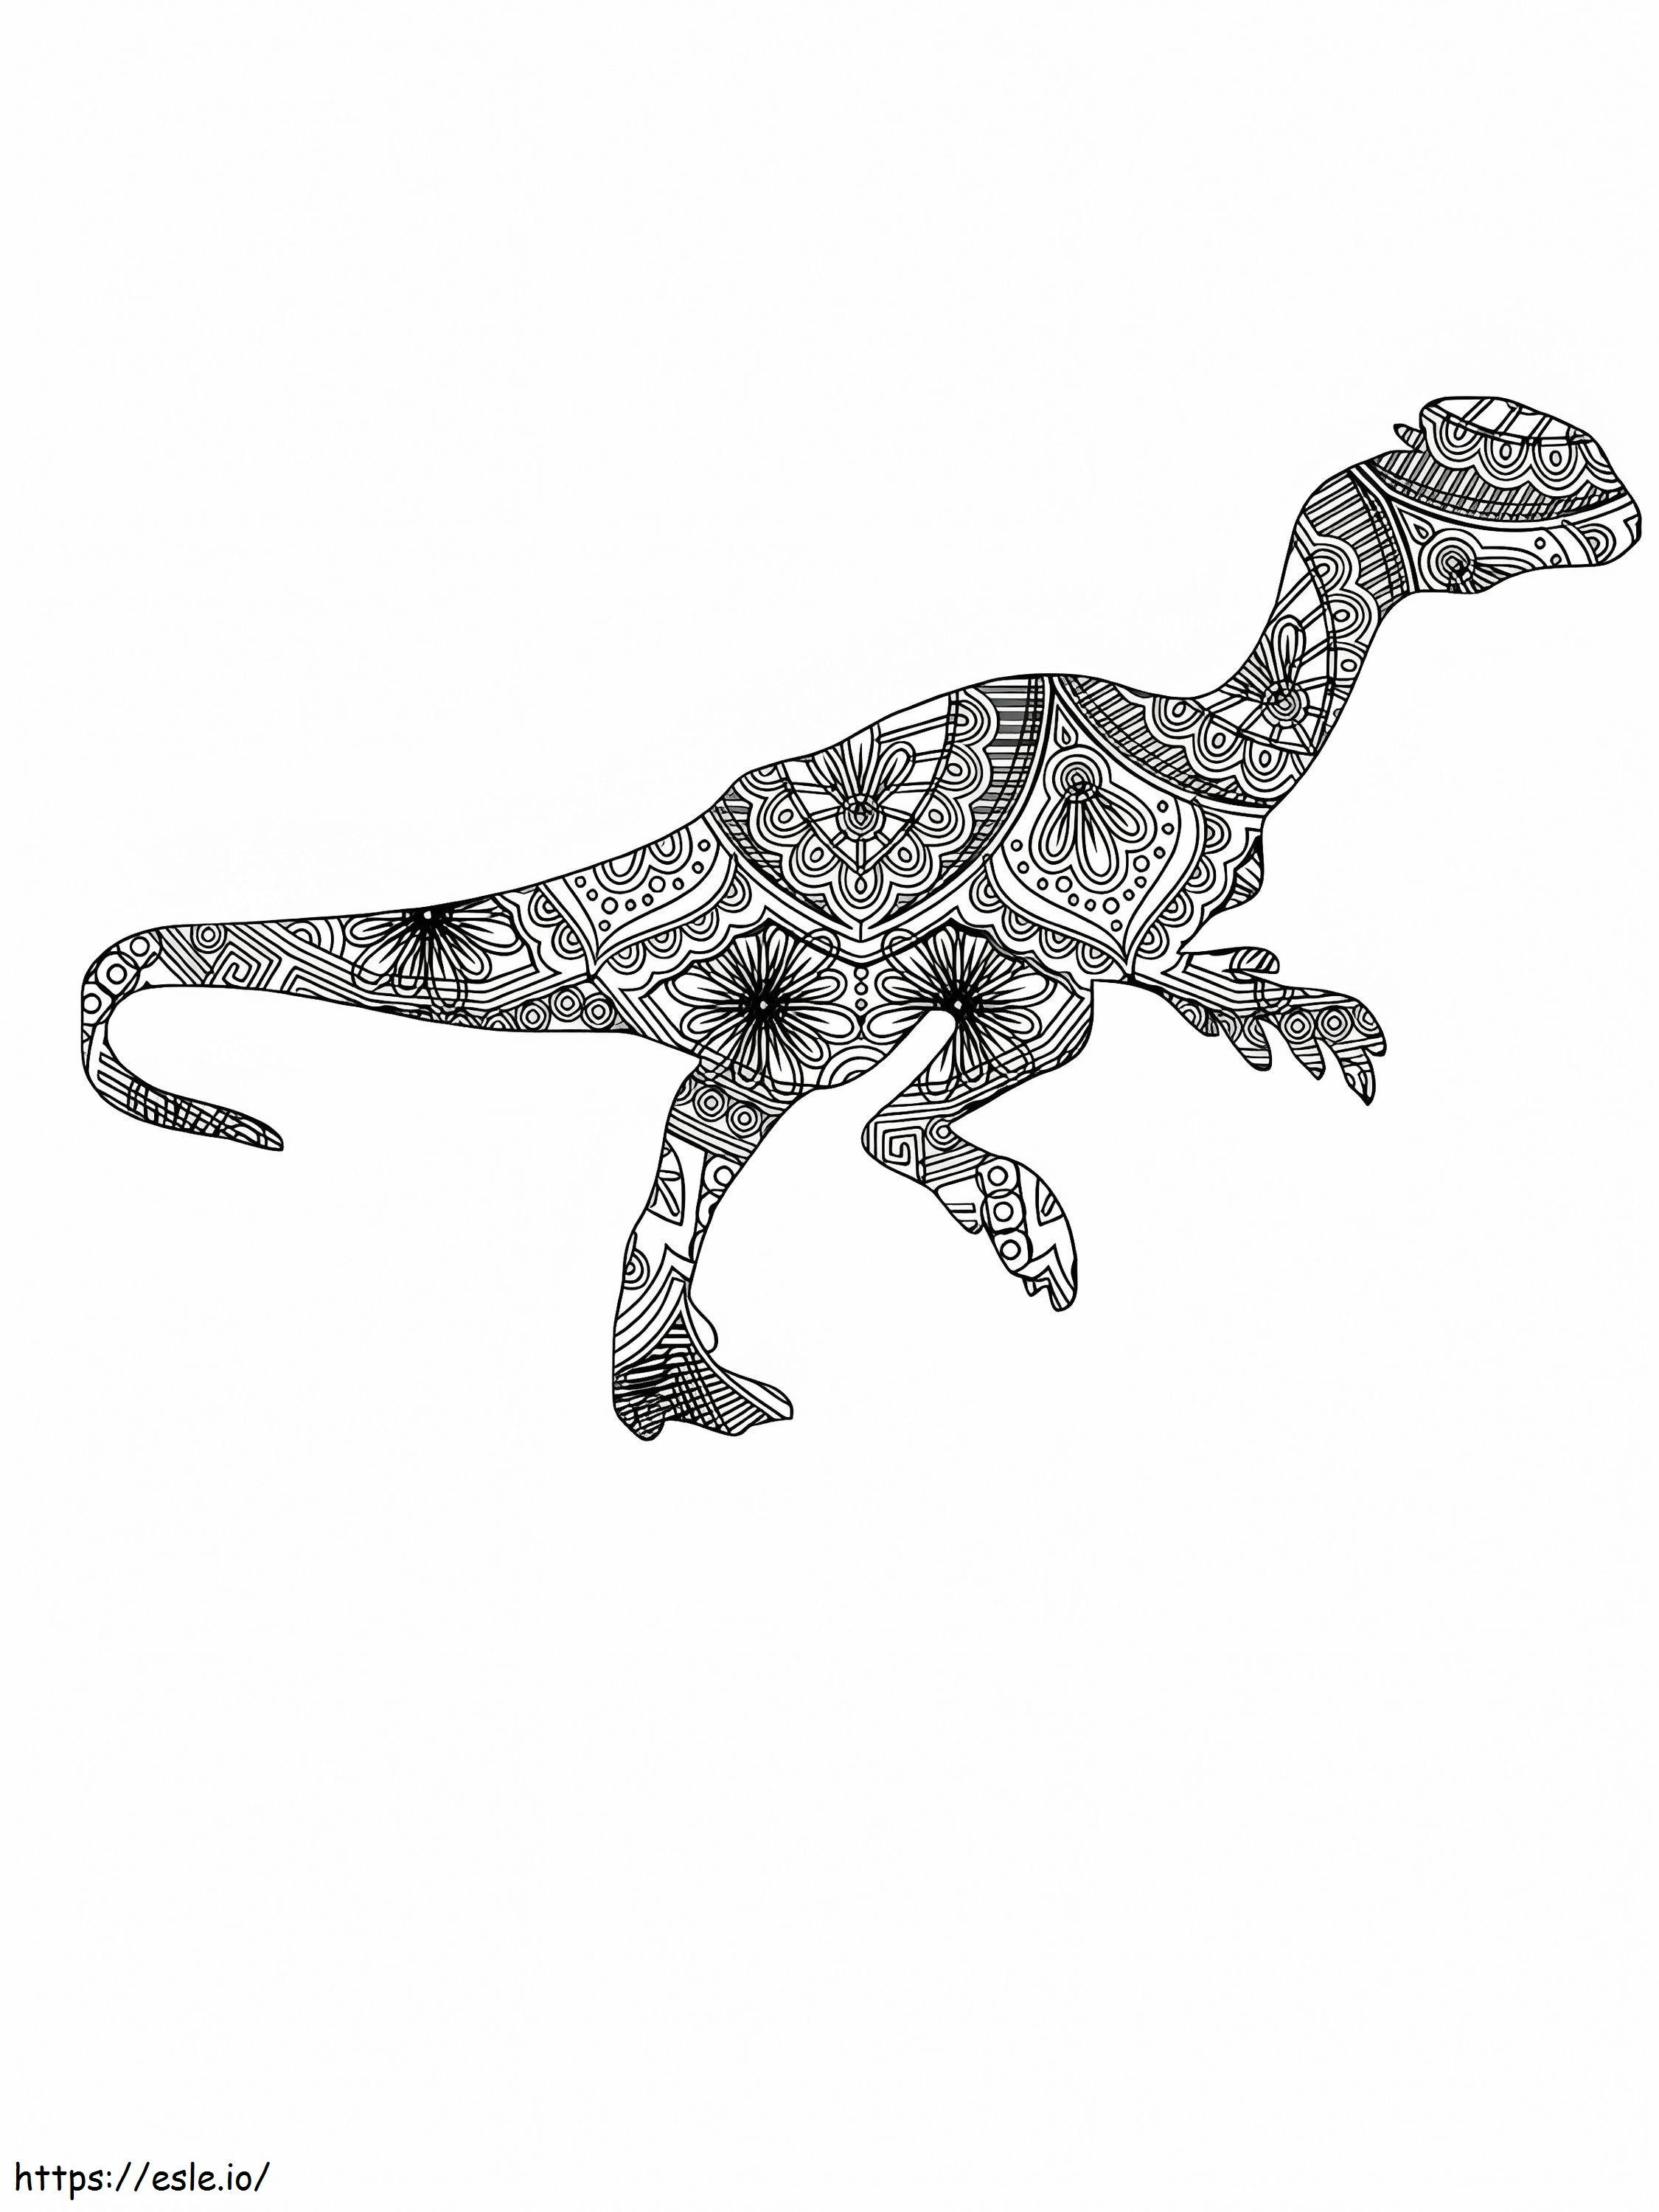 Wandelende dinosaurus Alebrijes kleurplaat kleurplaat